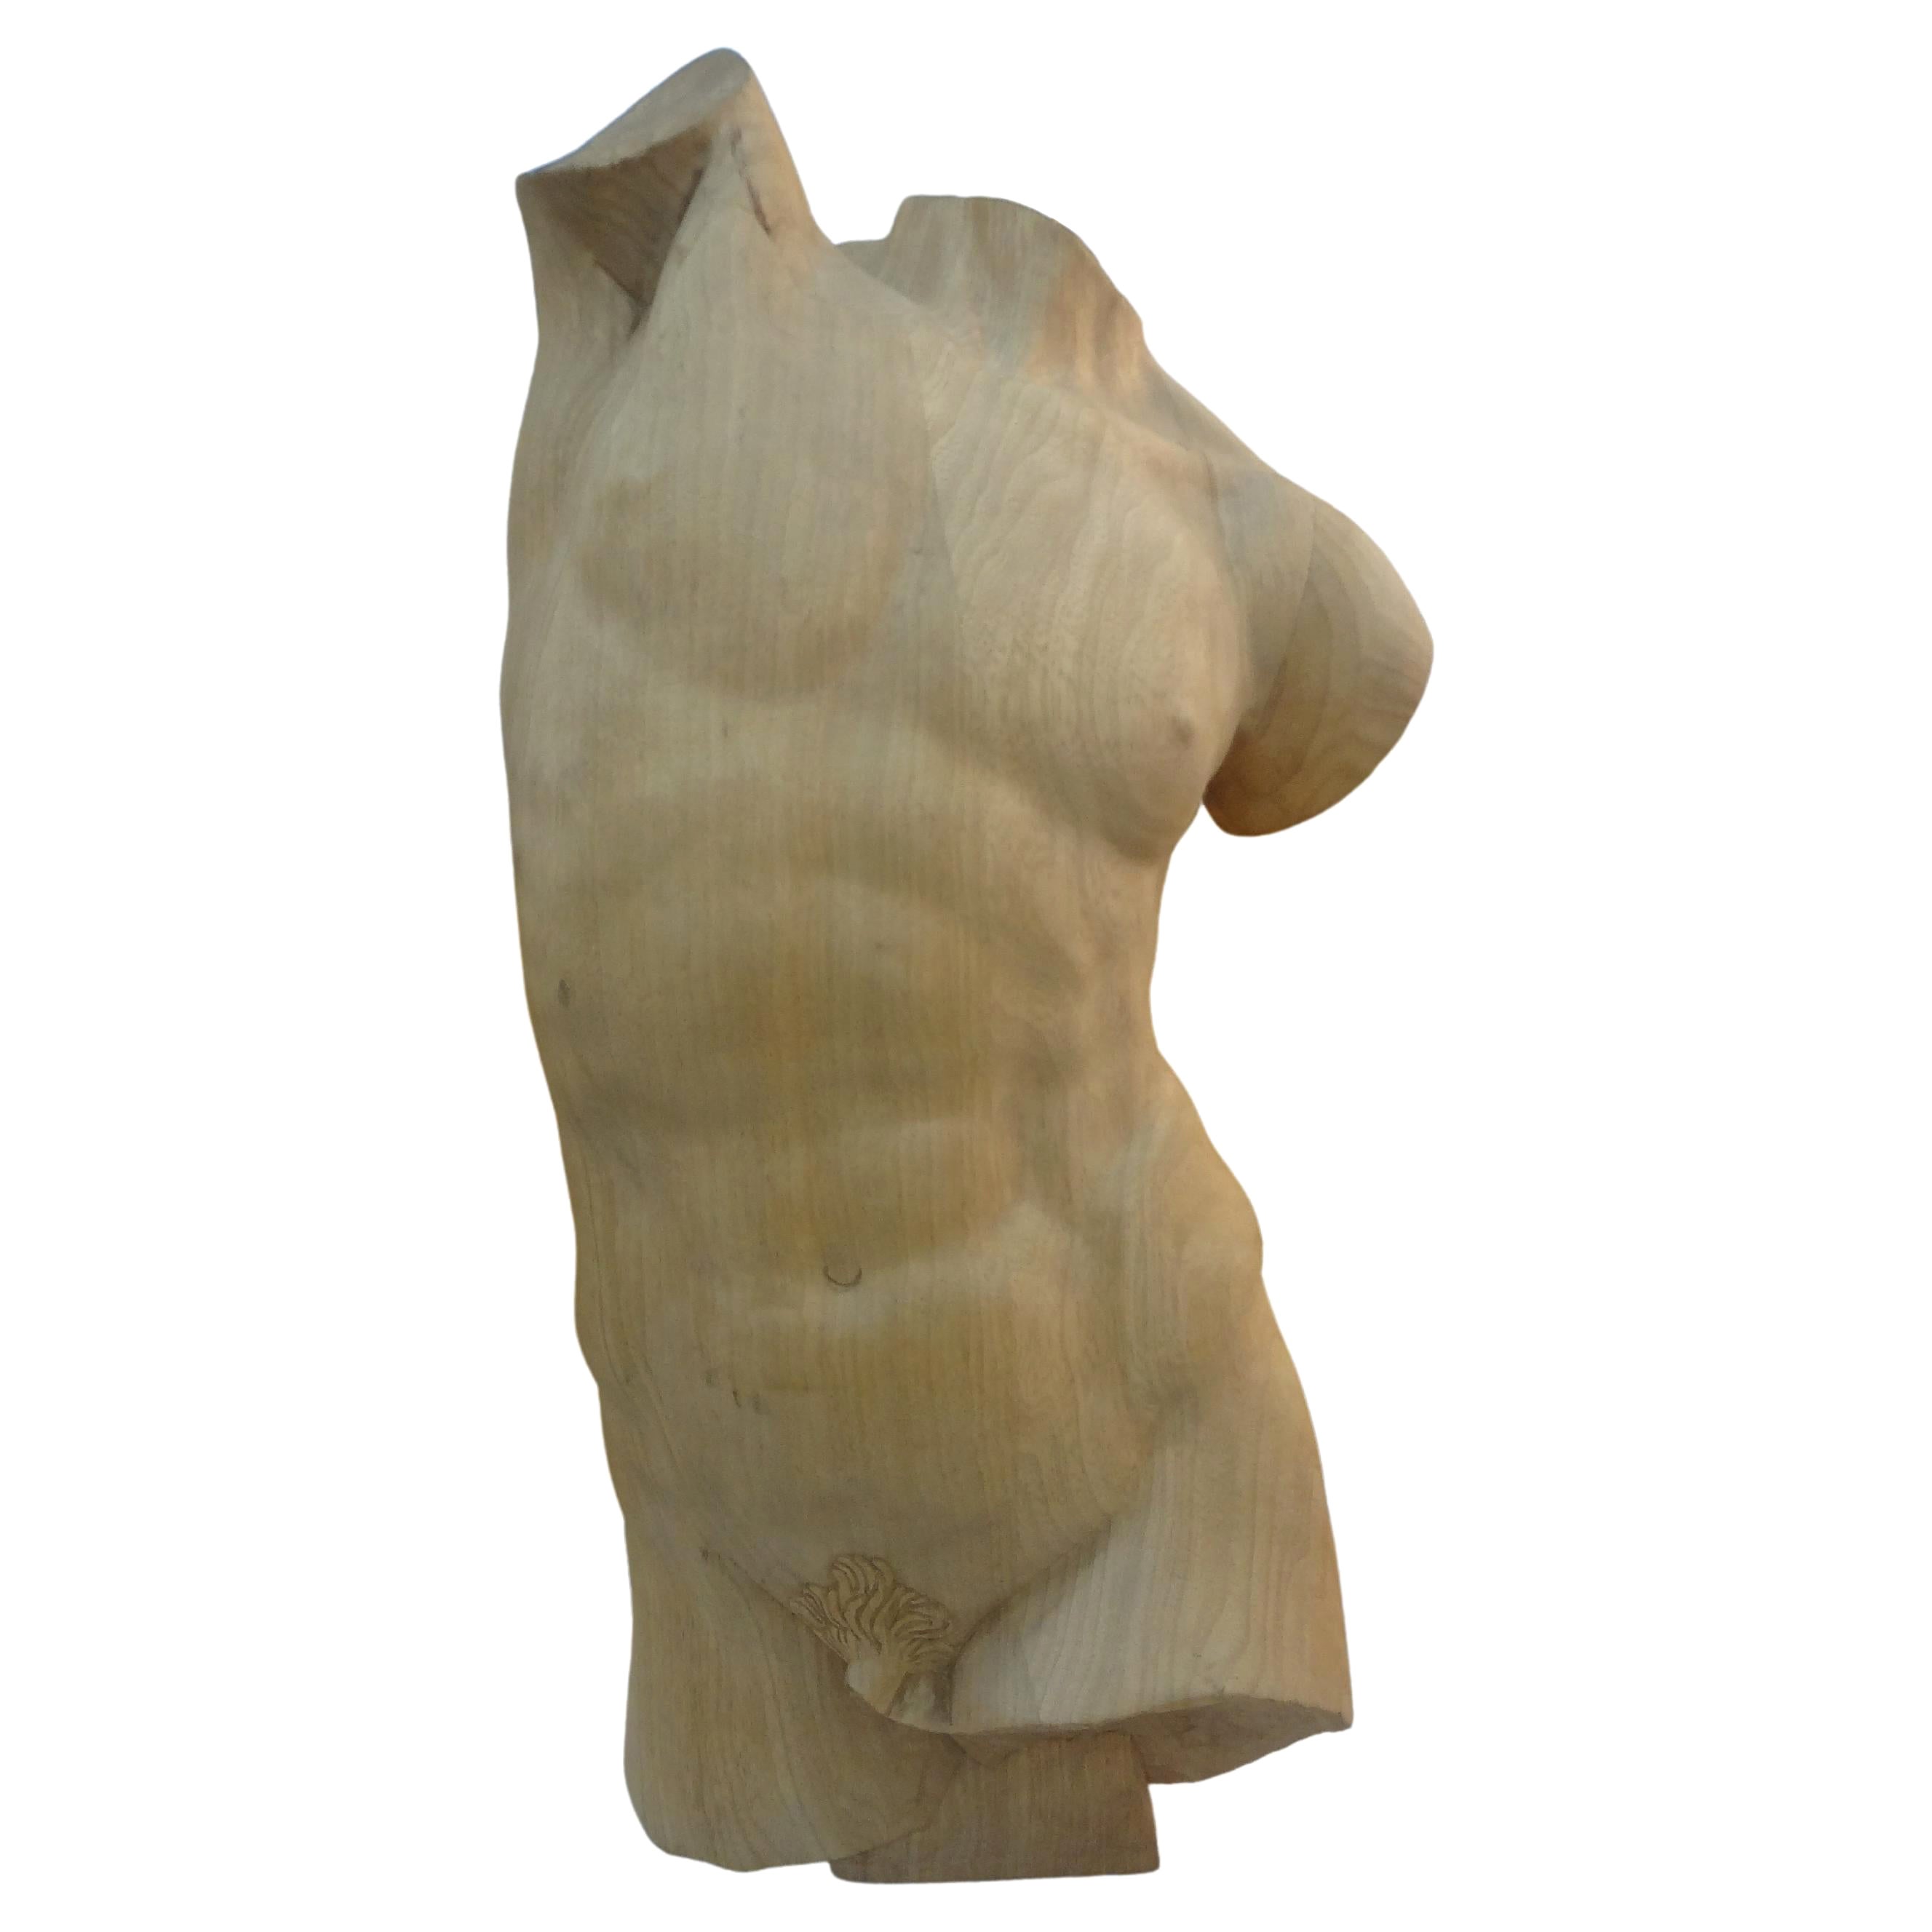 Torse masculin italien moderne en bois sculpté en vente